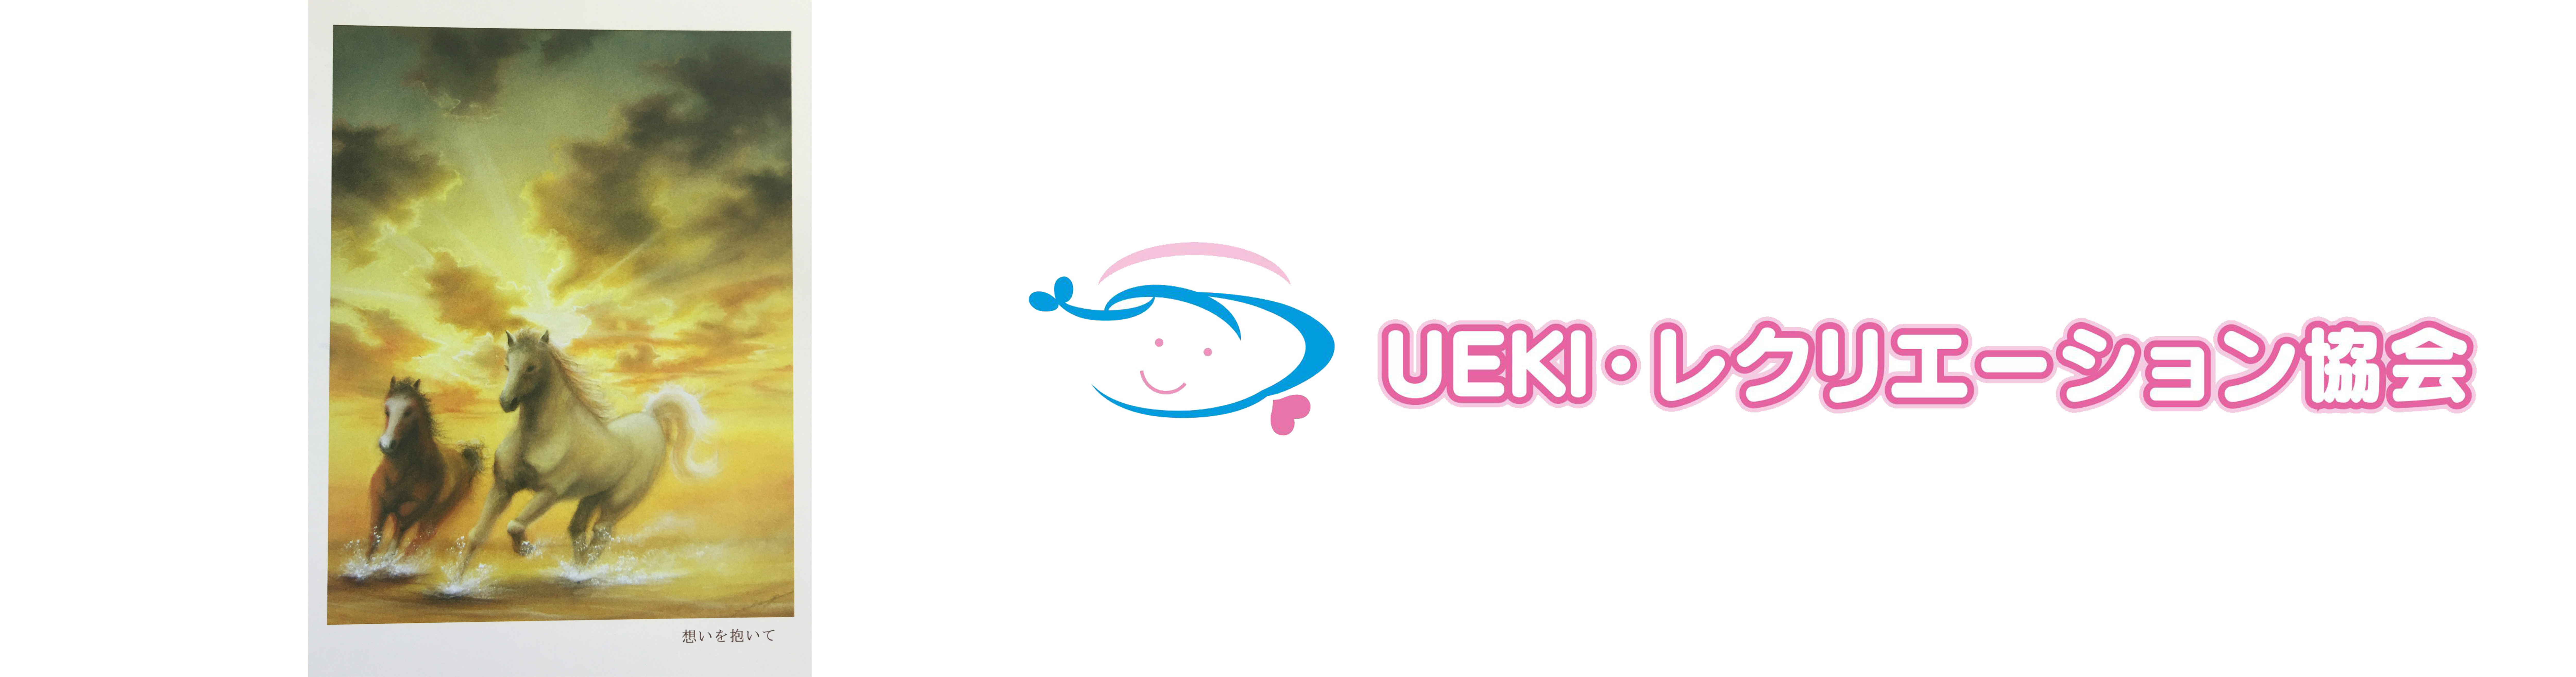 UEKI・レクリエーション協会